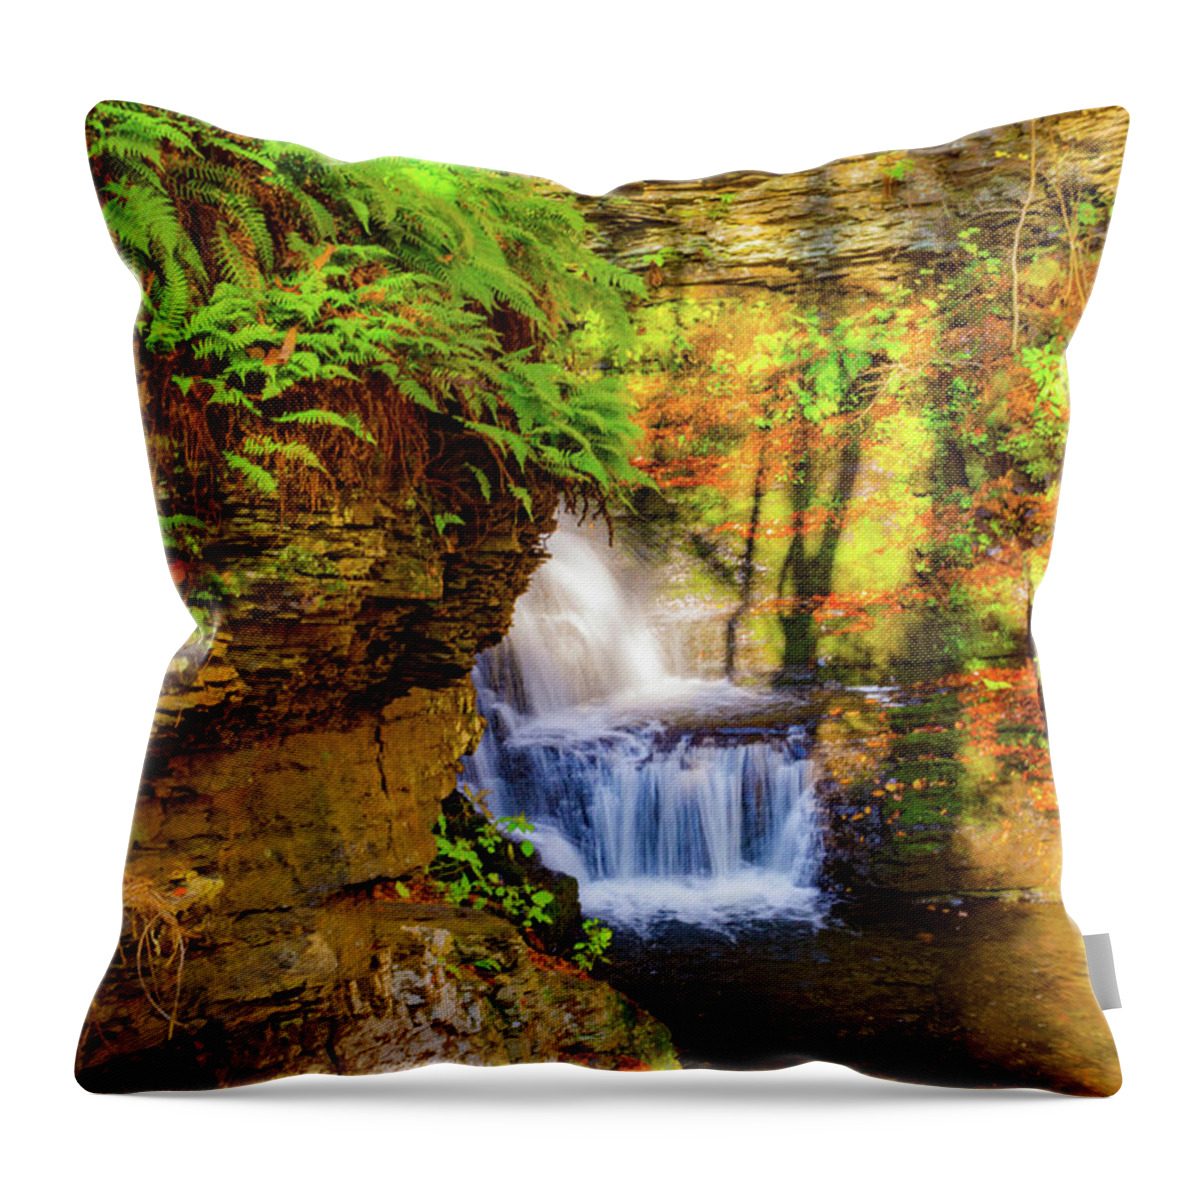 Waterfall Throw Pillow featuring the photograph Bushkill Falls Beauty by Jodi Lyn Jones